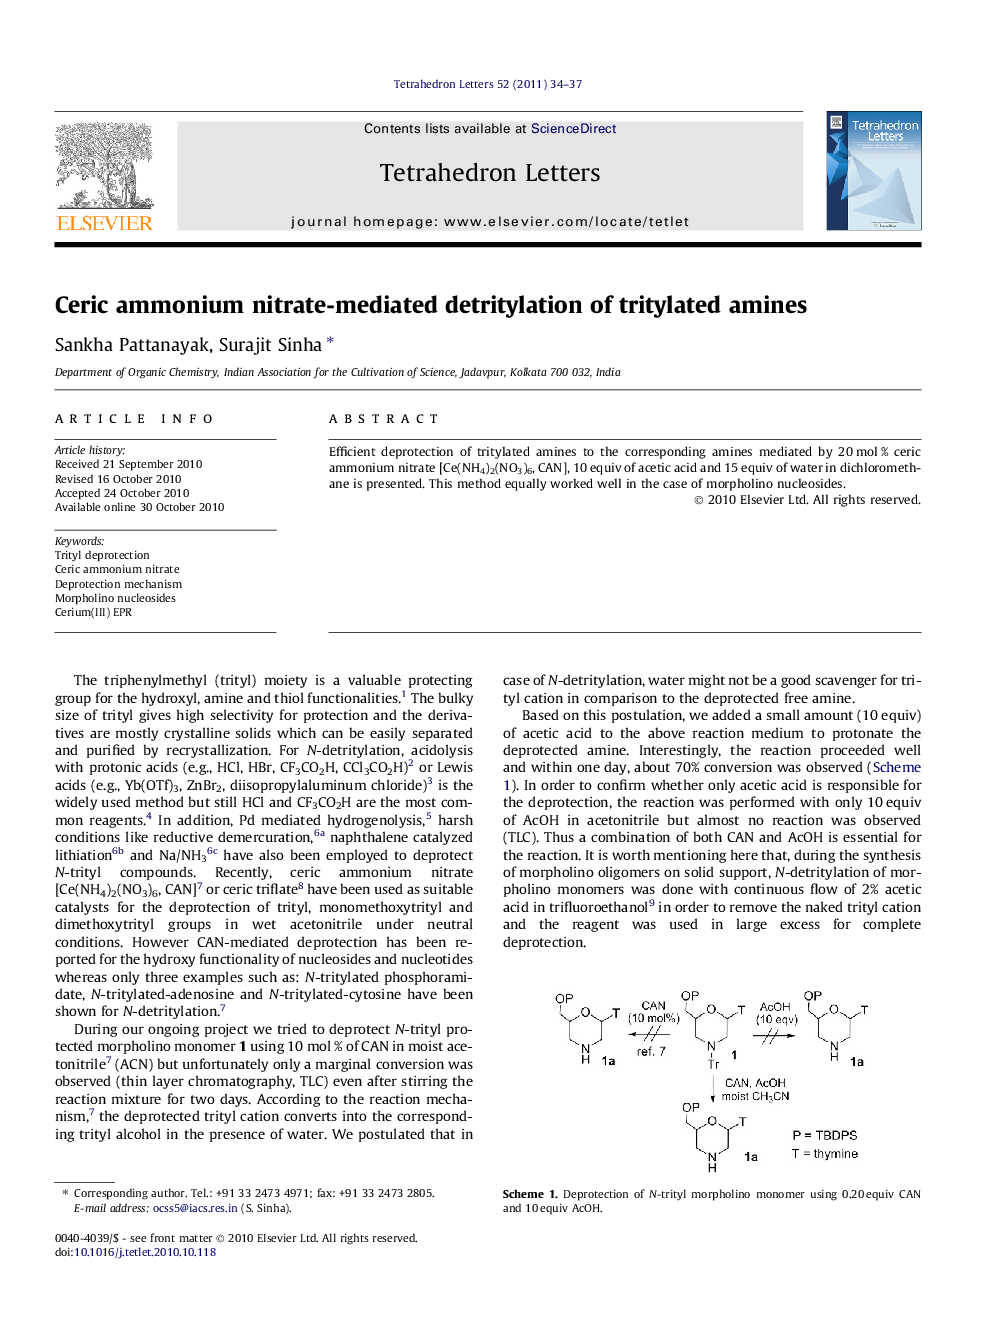 Ceric ammonium nitrate-mediated detritylation of tritylated amines